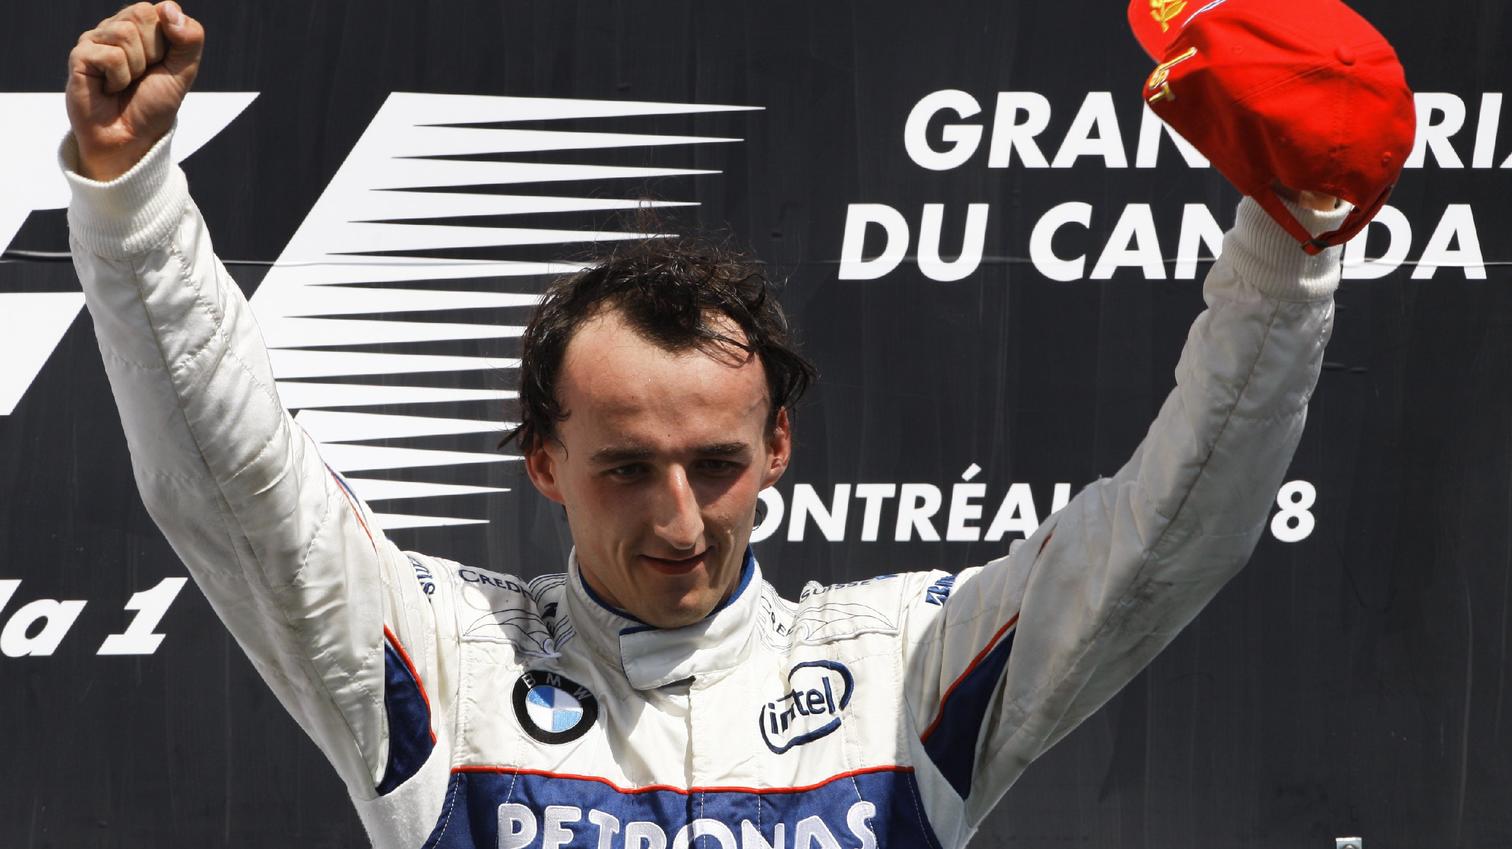 Polish Formula One driver Robert Kubica of BMW Sauber celebrates on the podium after winning the Grand Prix of Canada, Sunday 08 June 2008 in Montreal, Canada. Foto: JENS BUETTNER dpa +++(c) dpa - Bildfunk+++